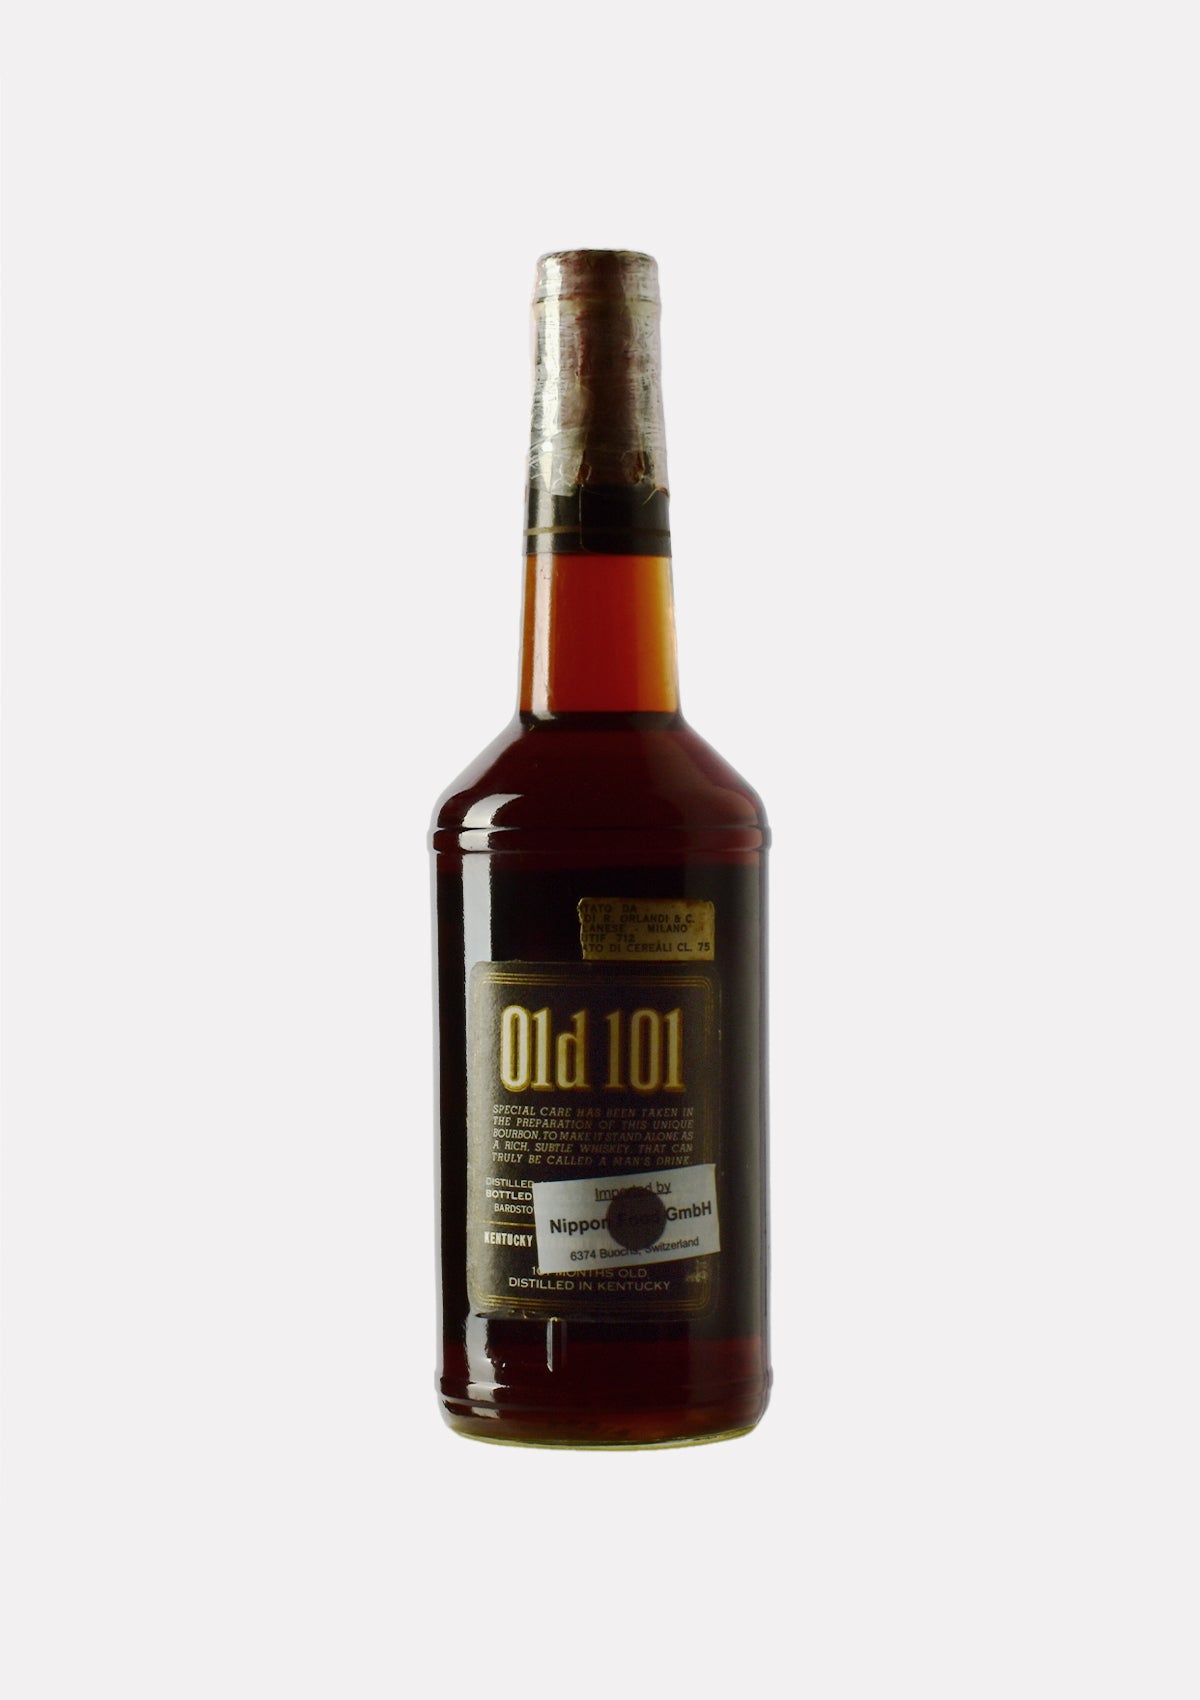 Old 101 Kentucky Straight Bourbon Whiskey